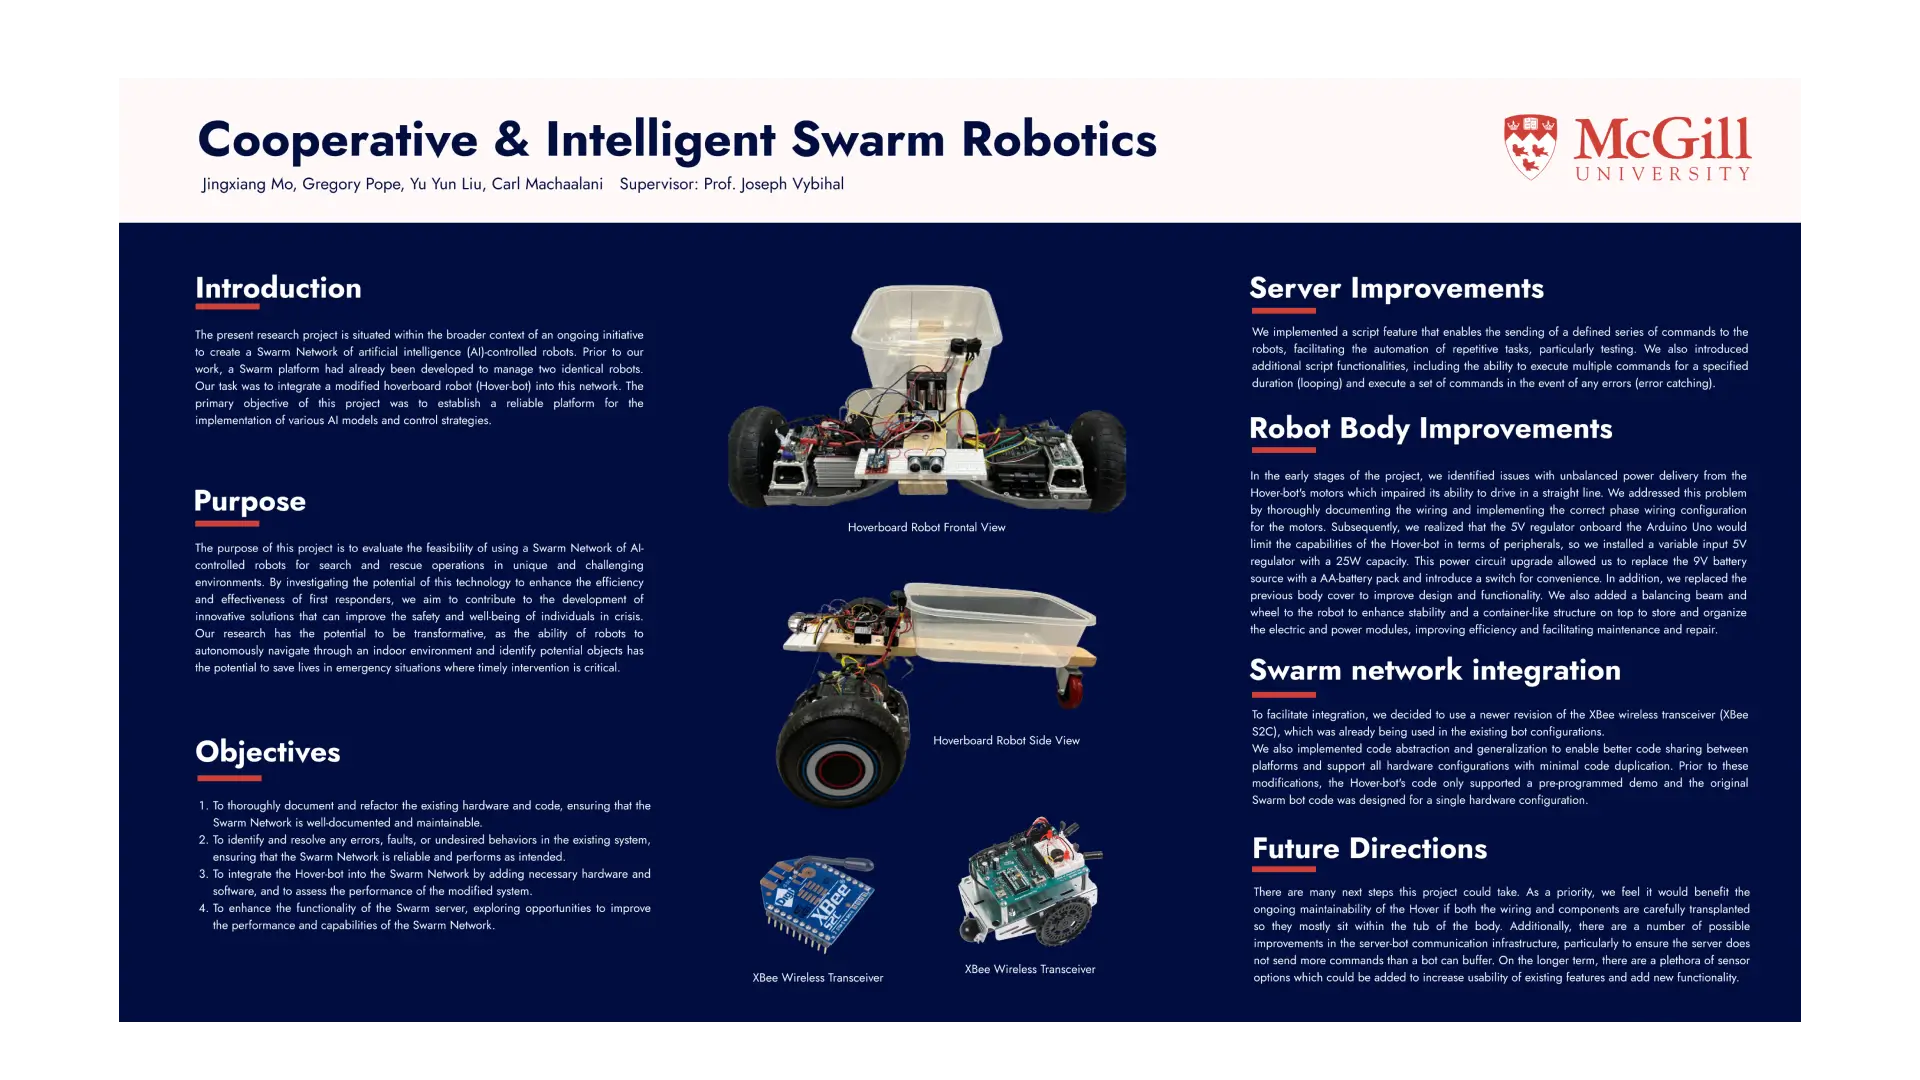 Cooperative & Intelligent Swarm Robotics Research